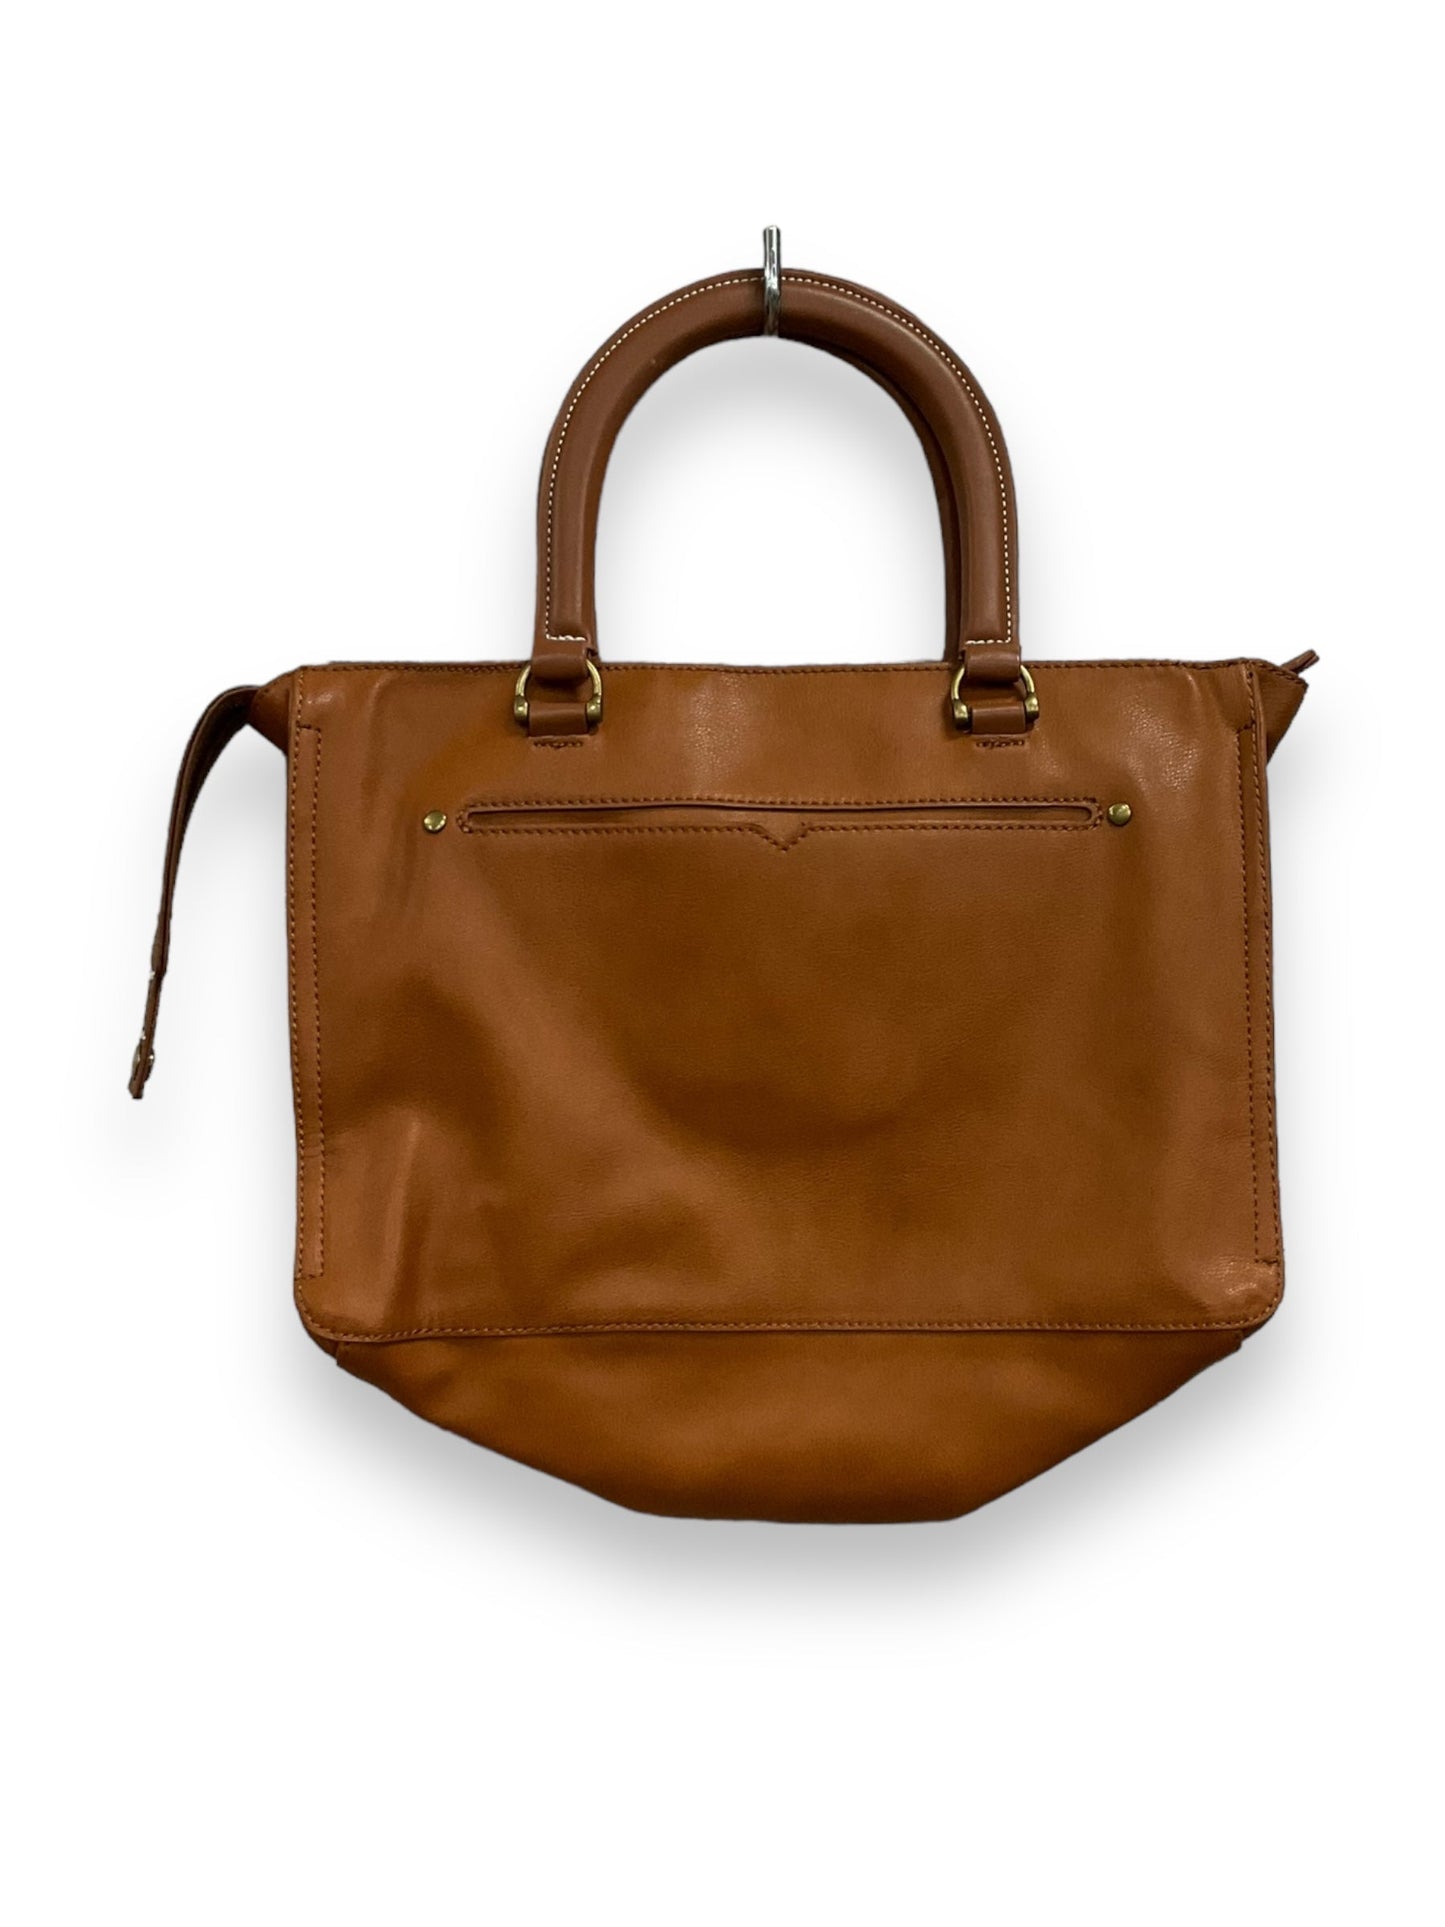 Handbag By Universal Thread  Size: Medium